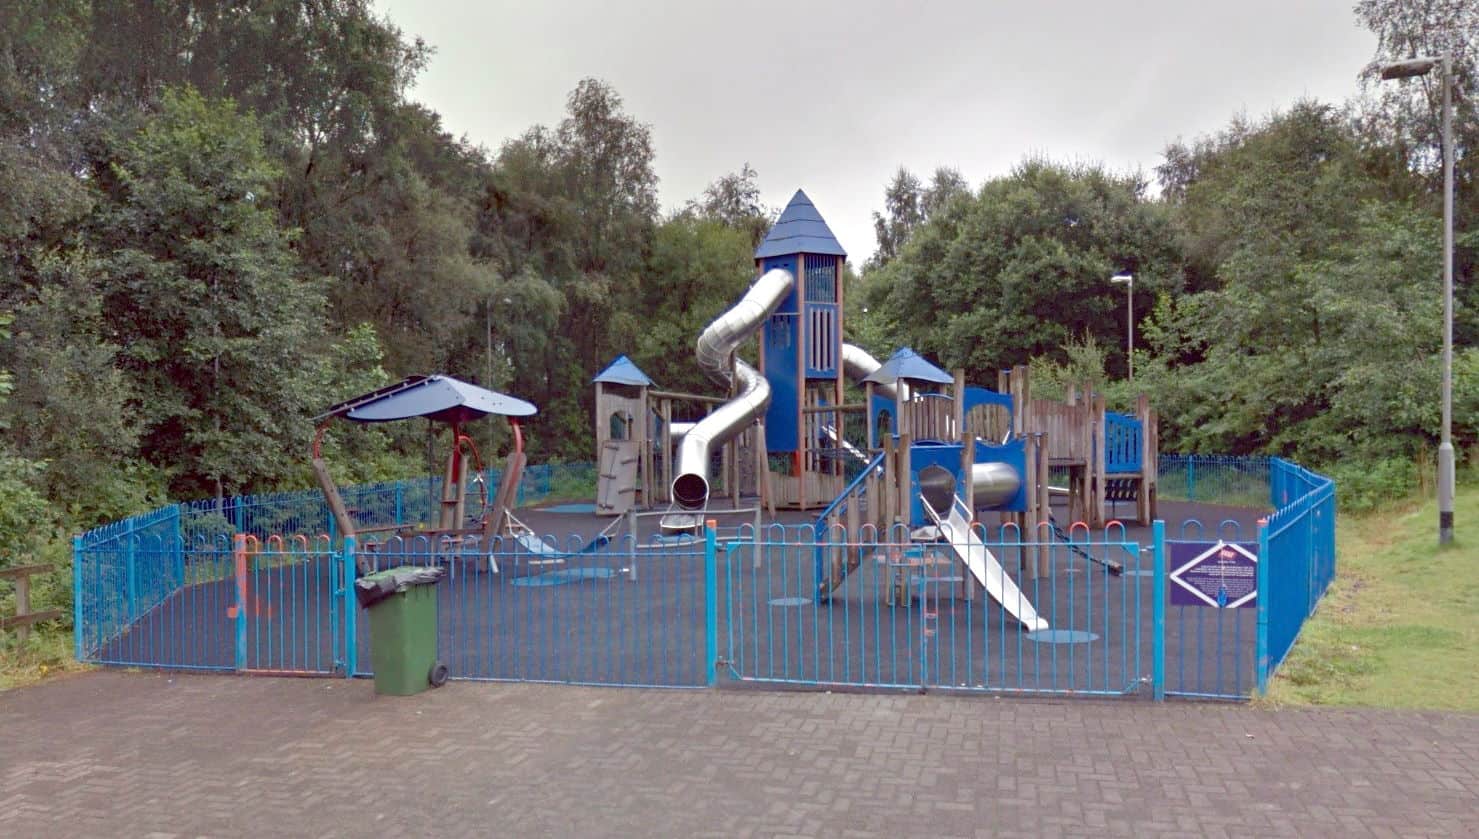 The Falkirk Wheel Children's Play Area